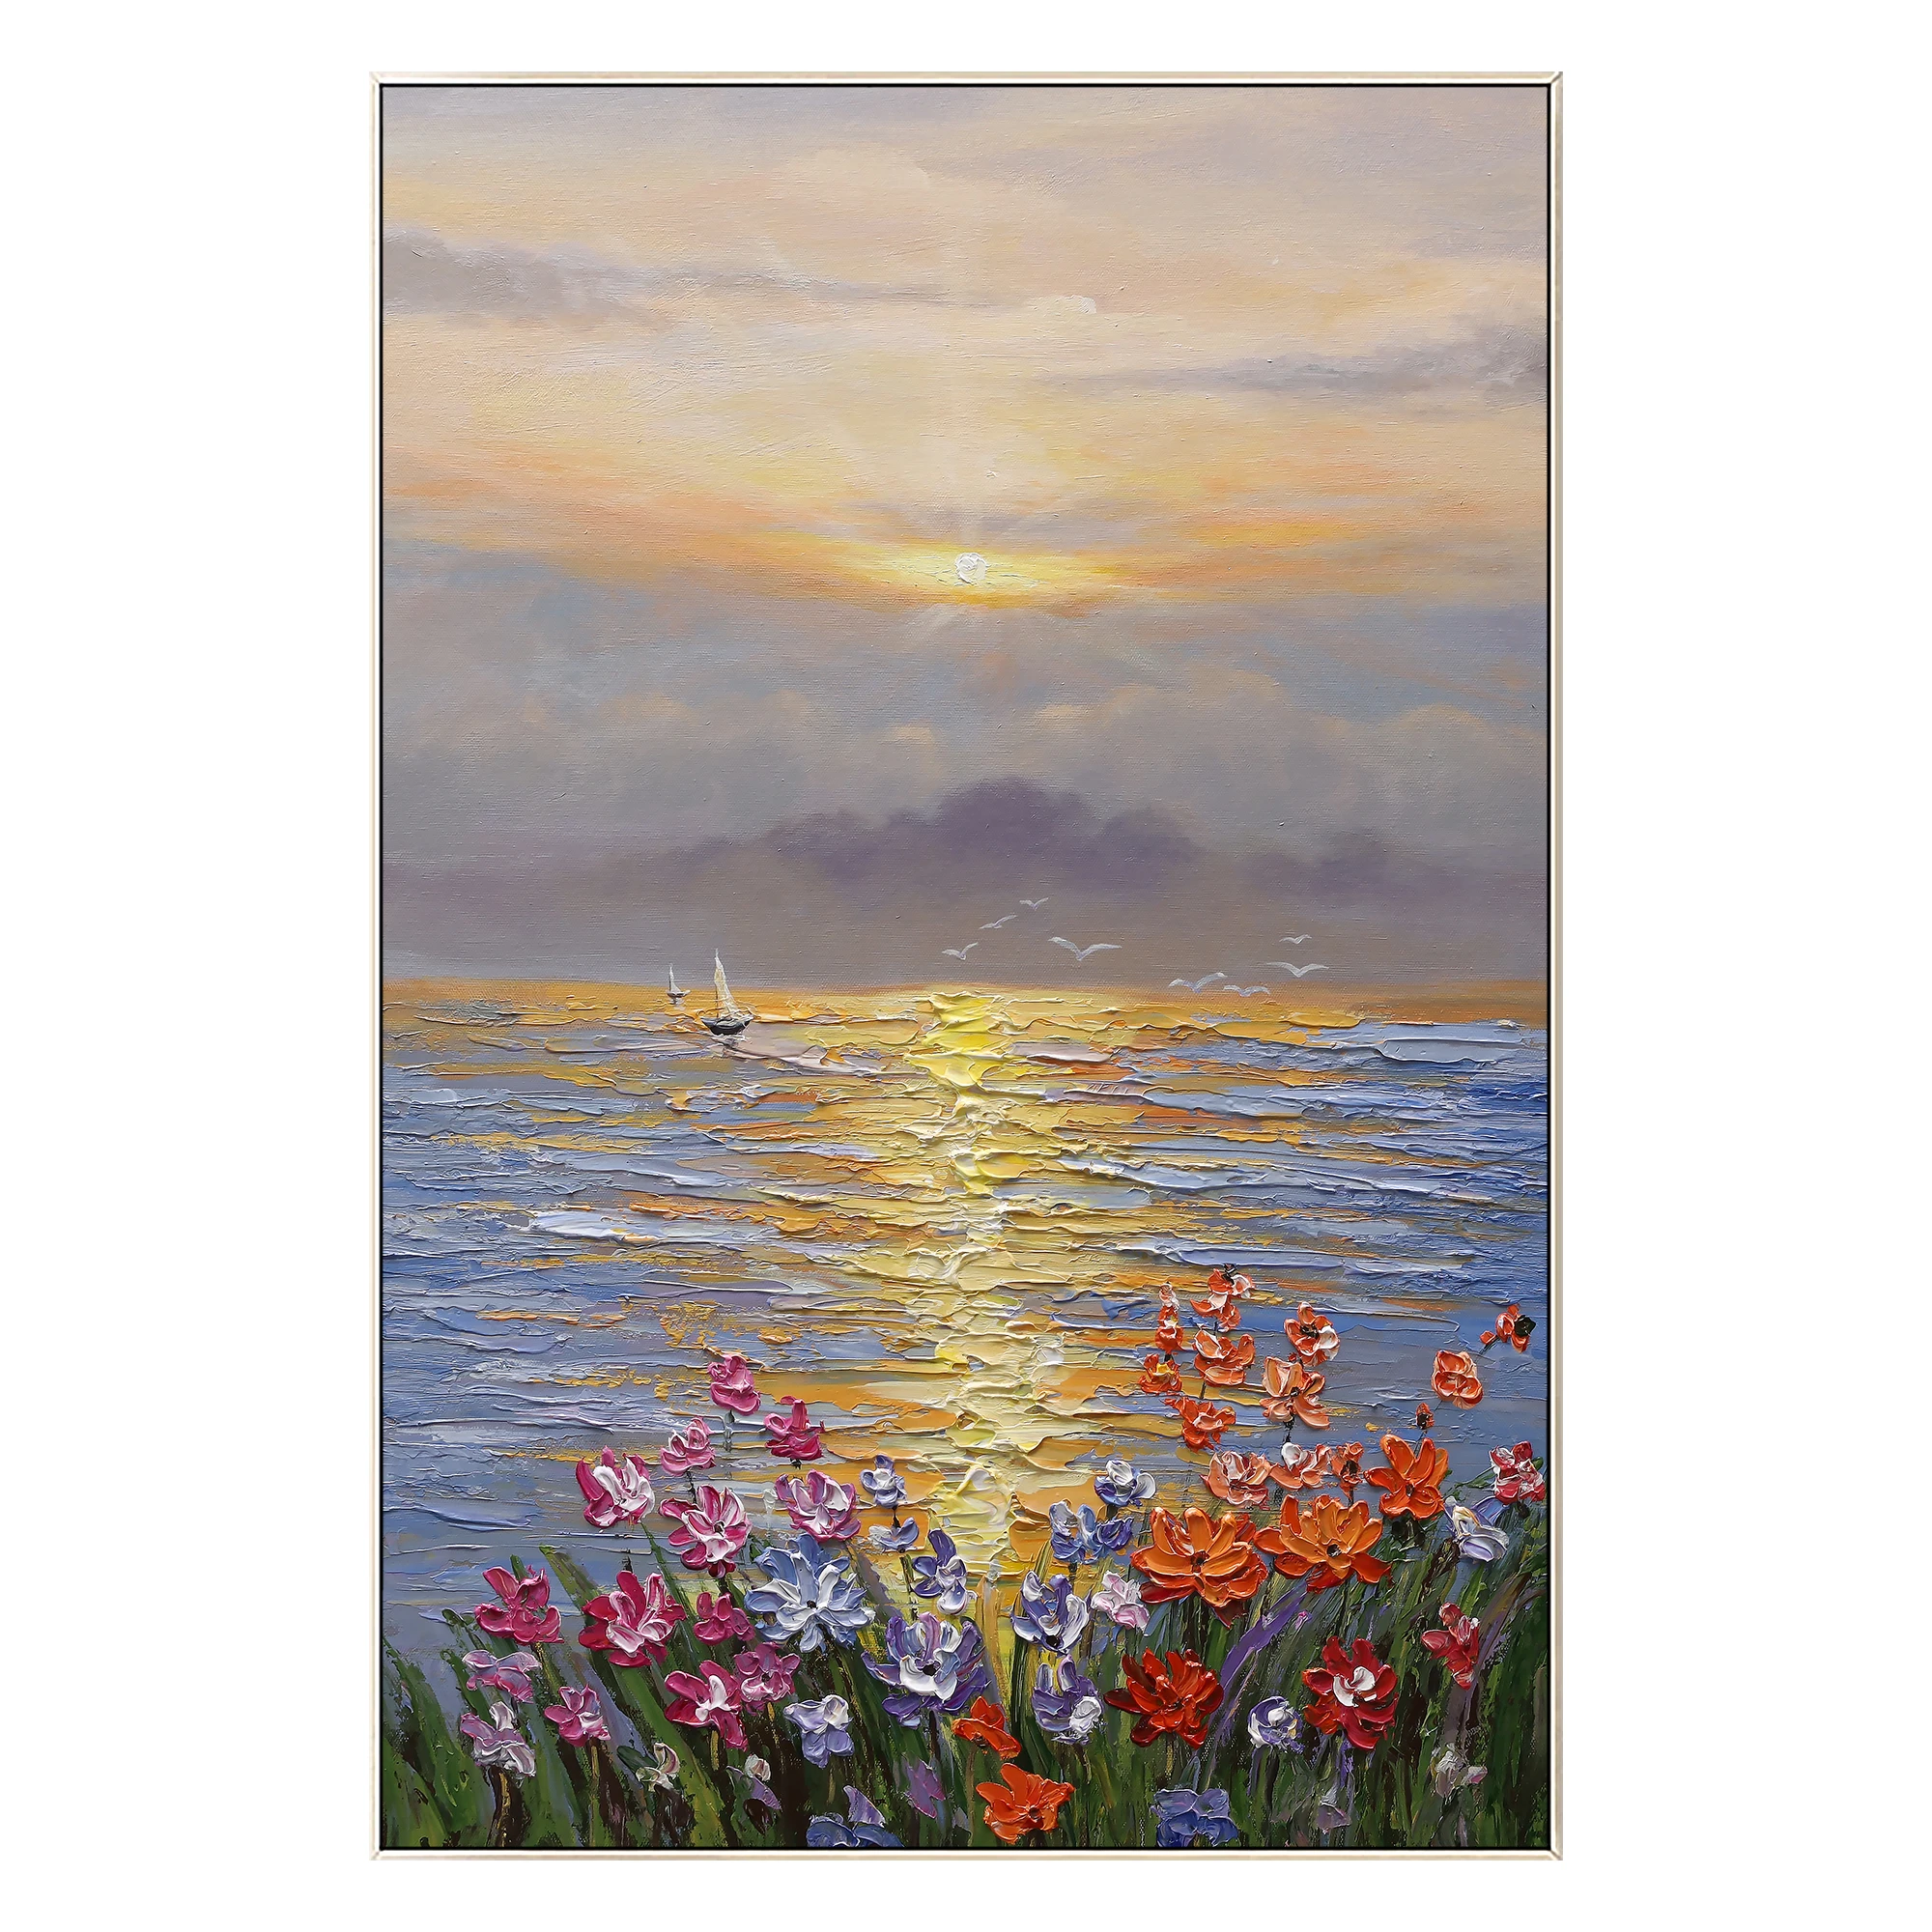 Handmade Flowers Seascape Sunrise Landscape Oil Painting On Canvas, Seascape Wall Art Home Décor